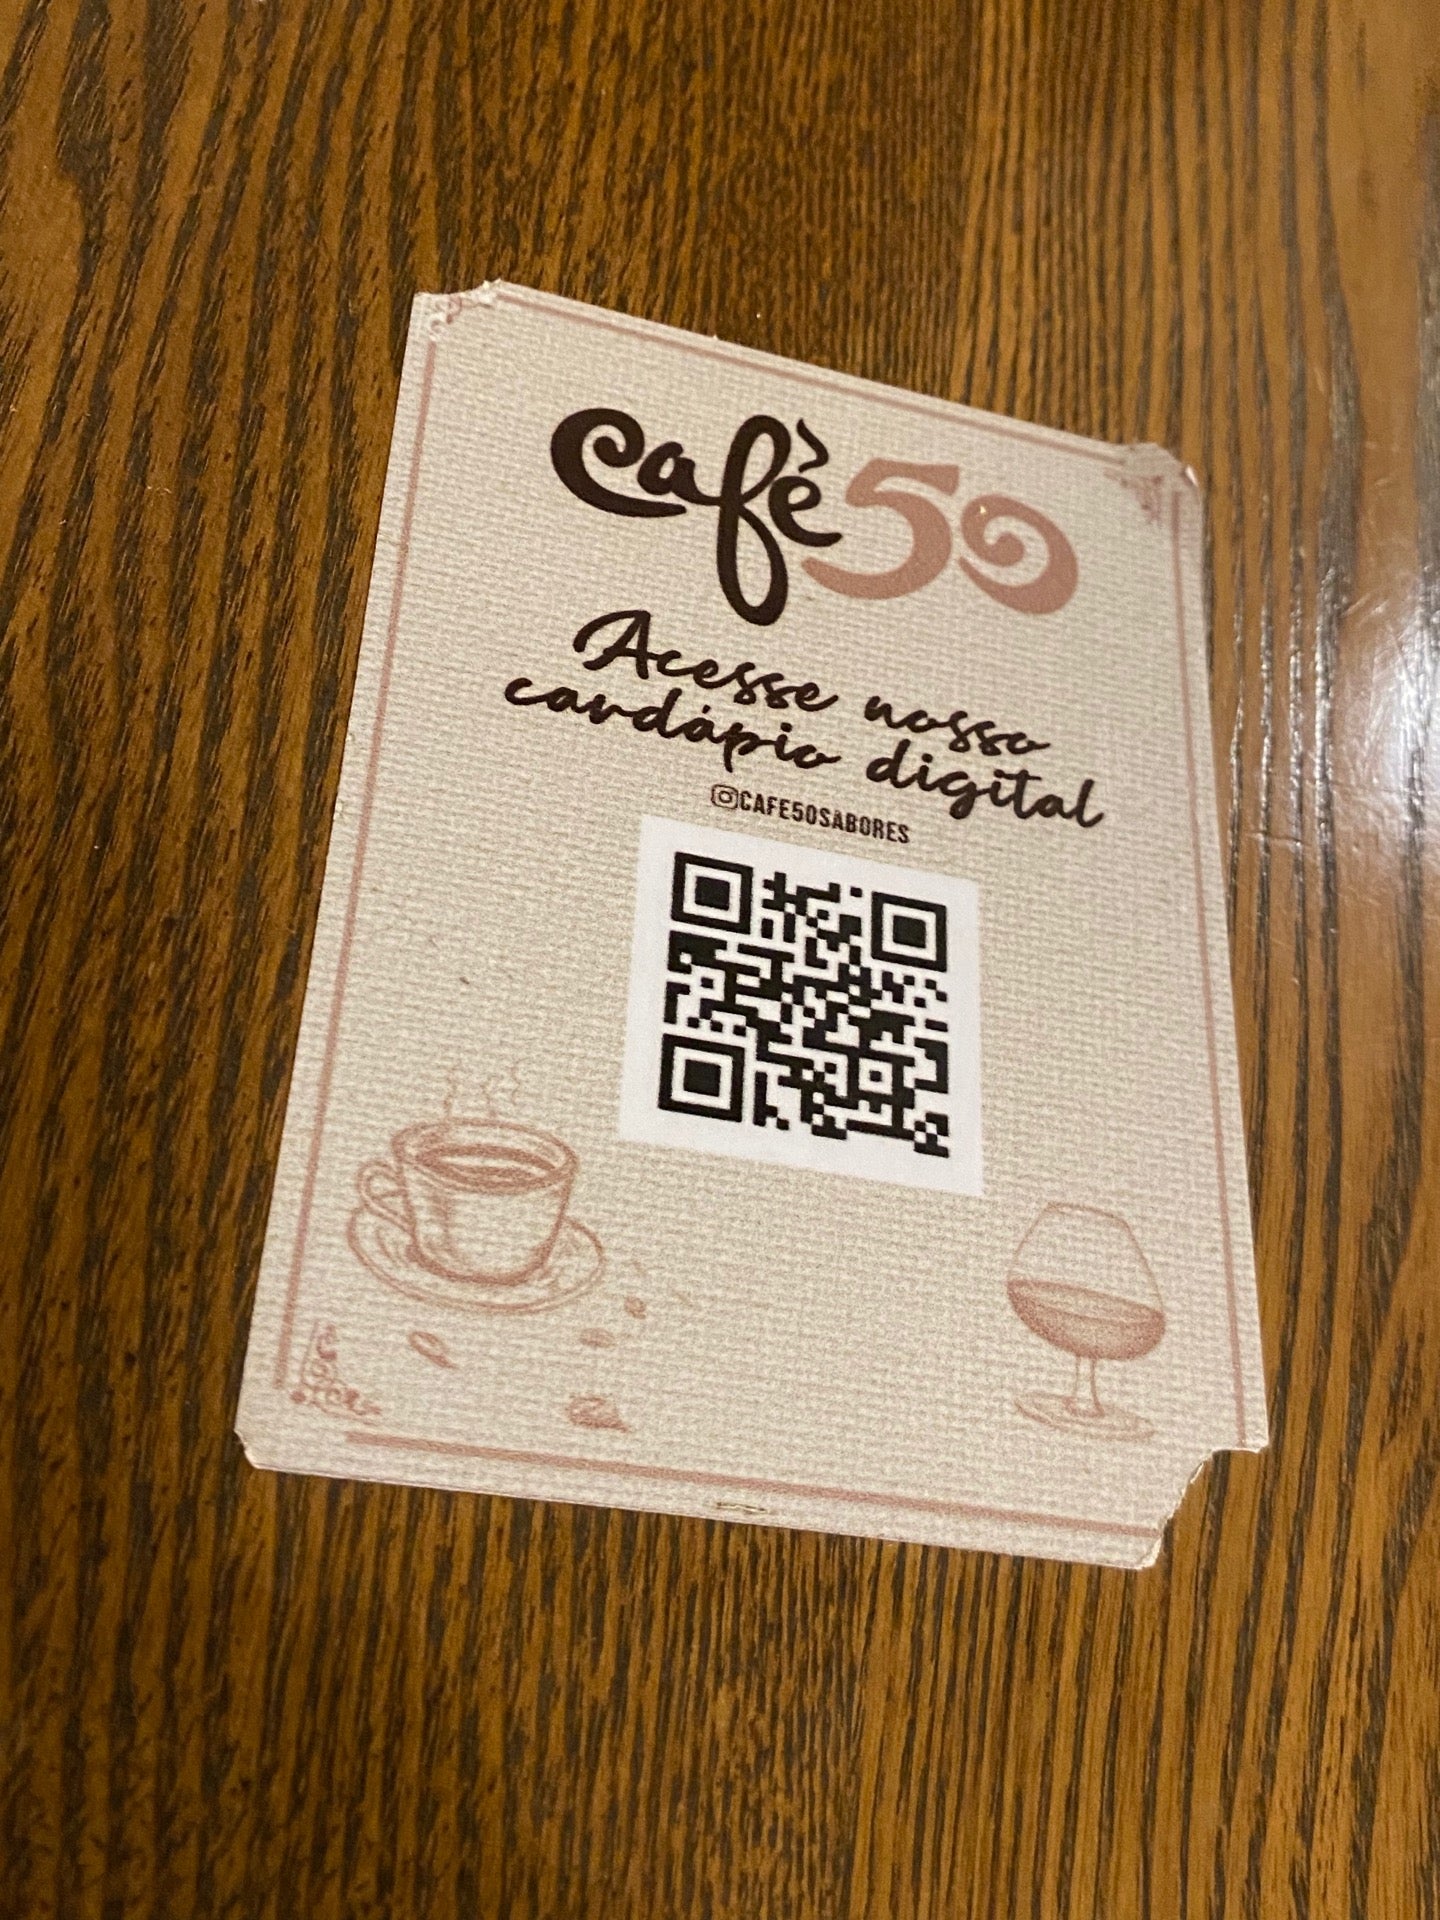 Cafe 50